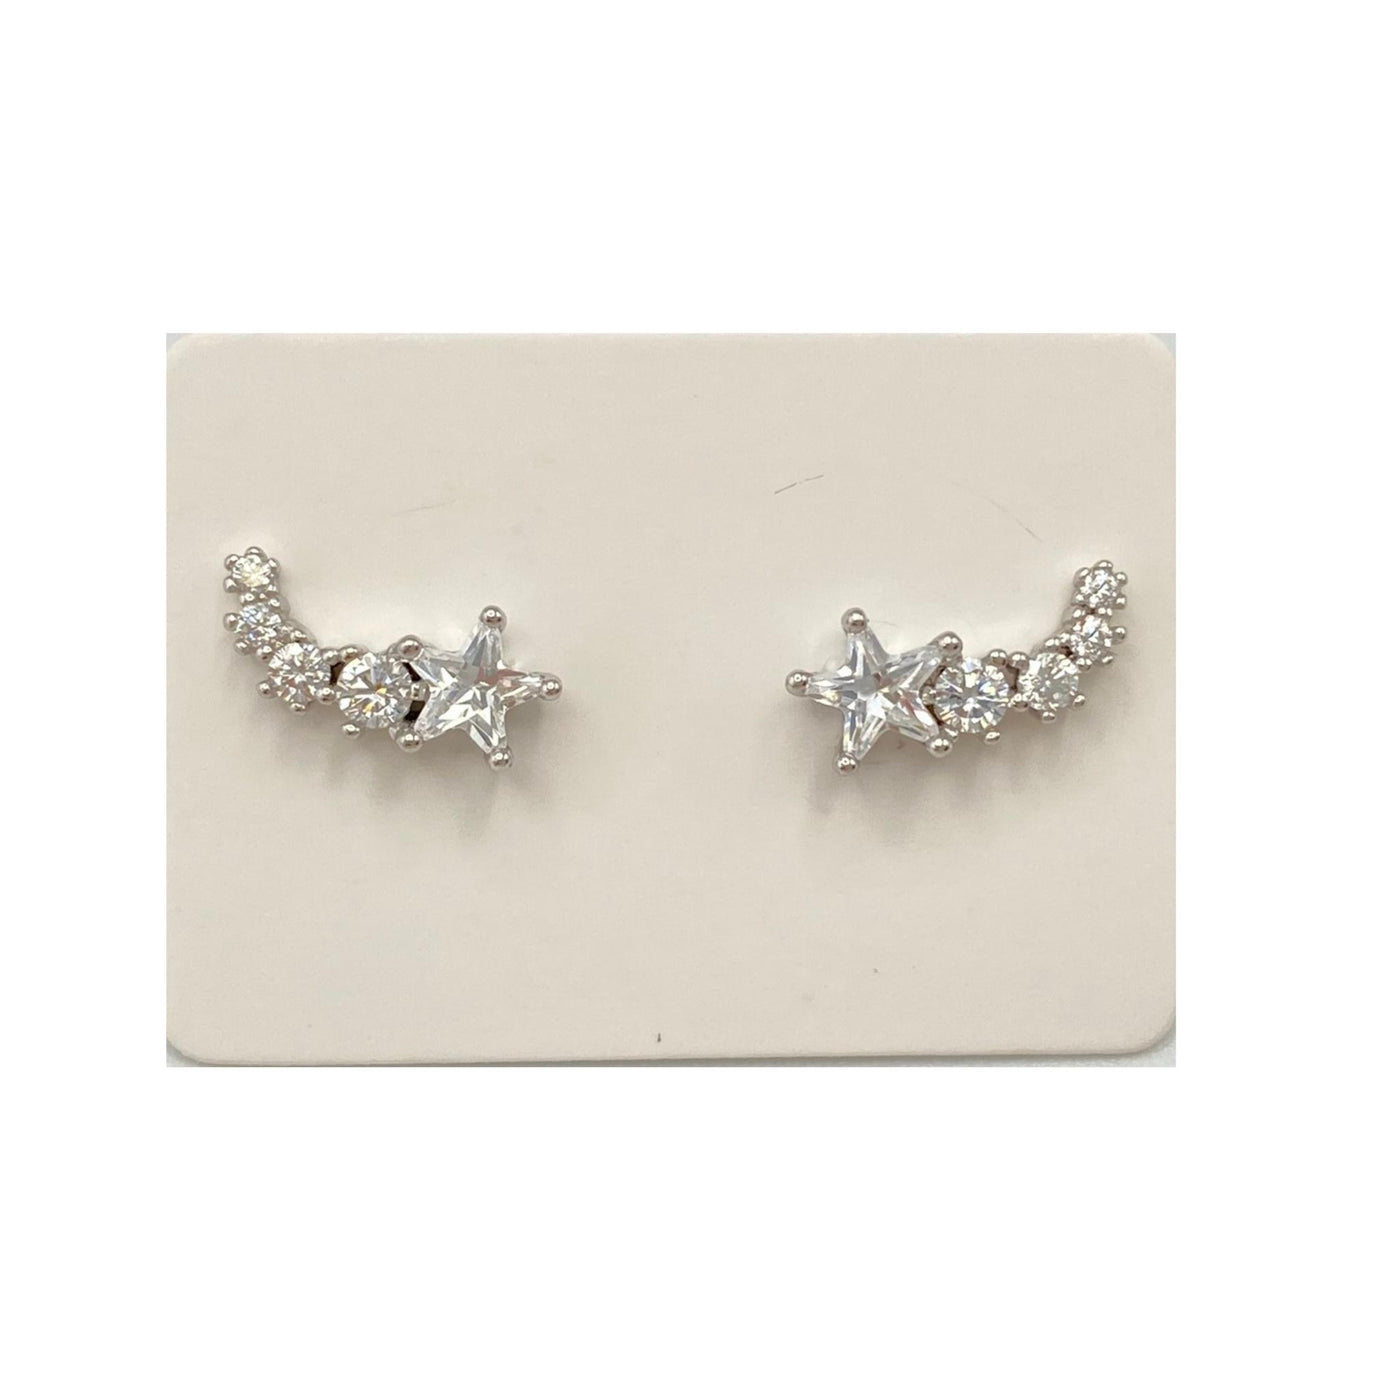 Pack  of 5 stud earrings with zirconia